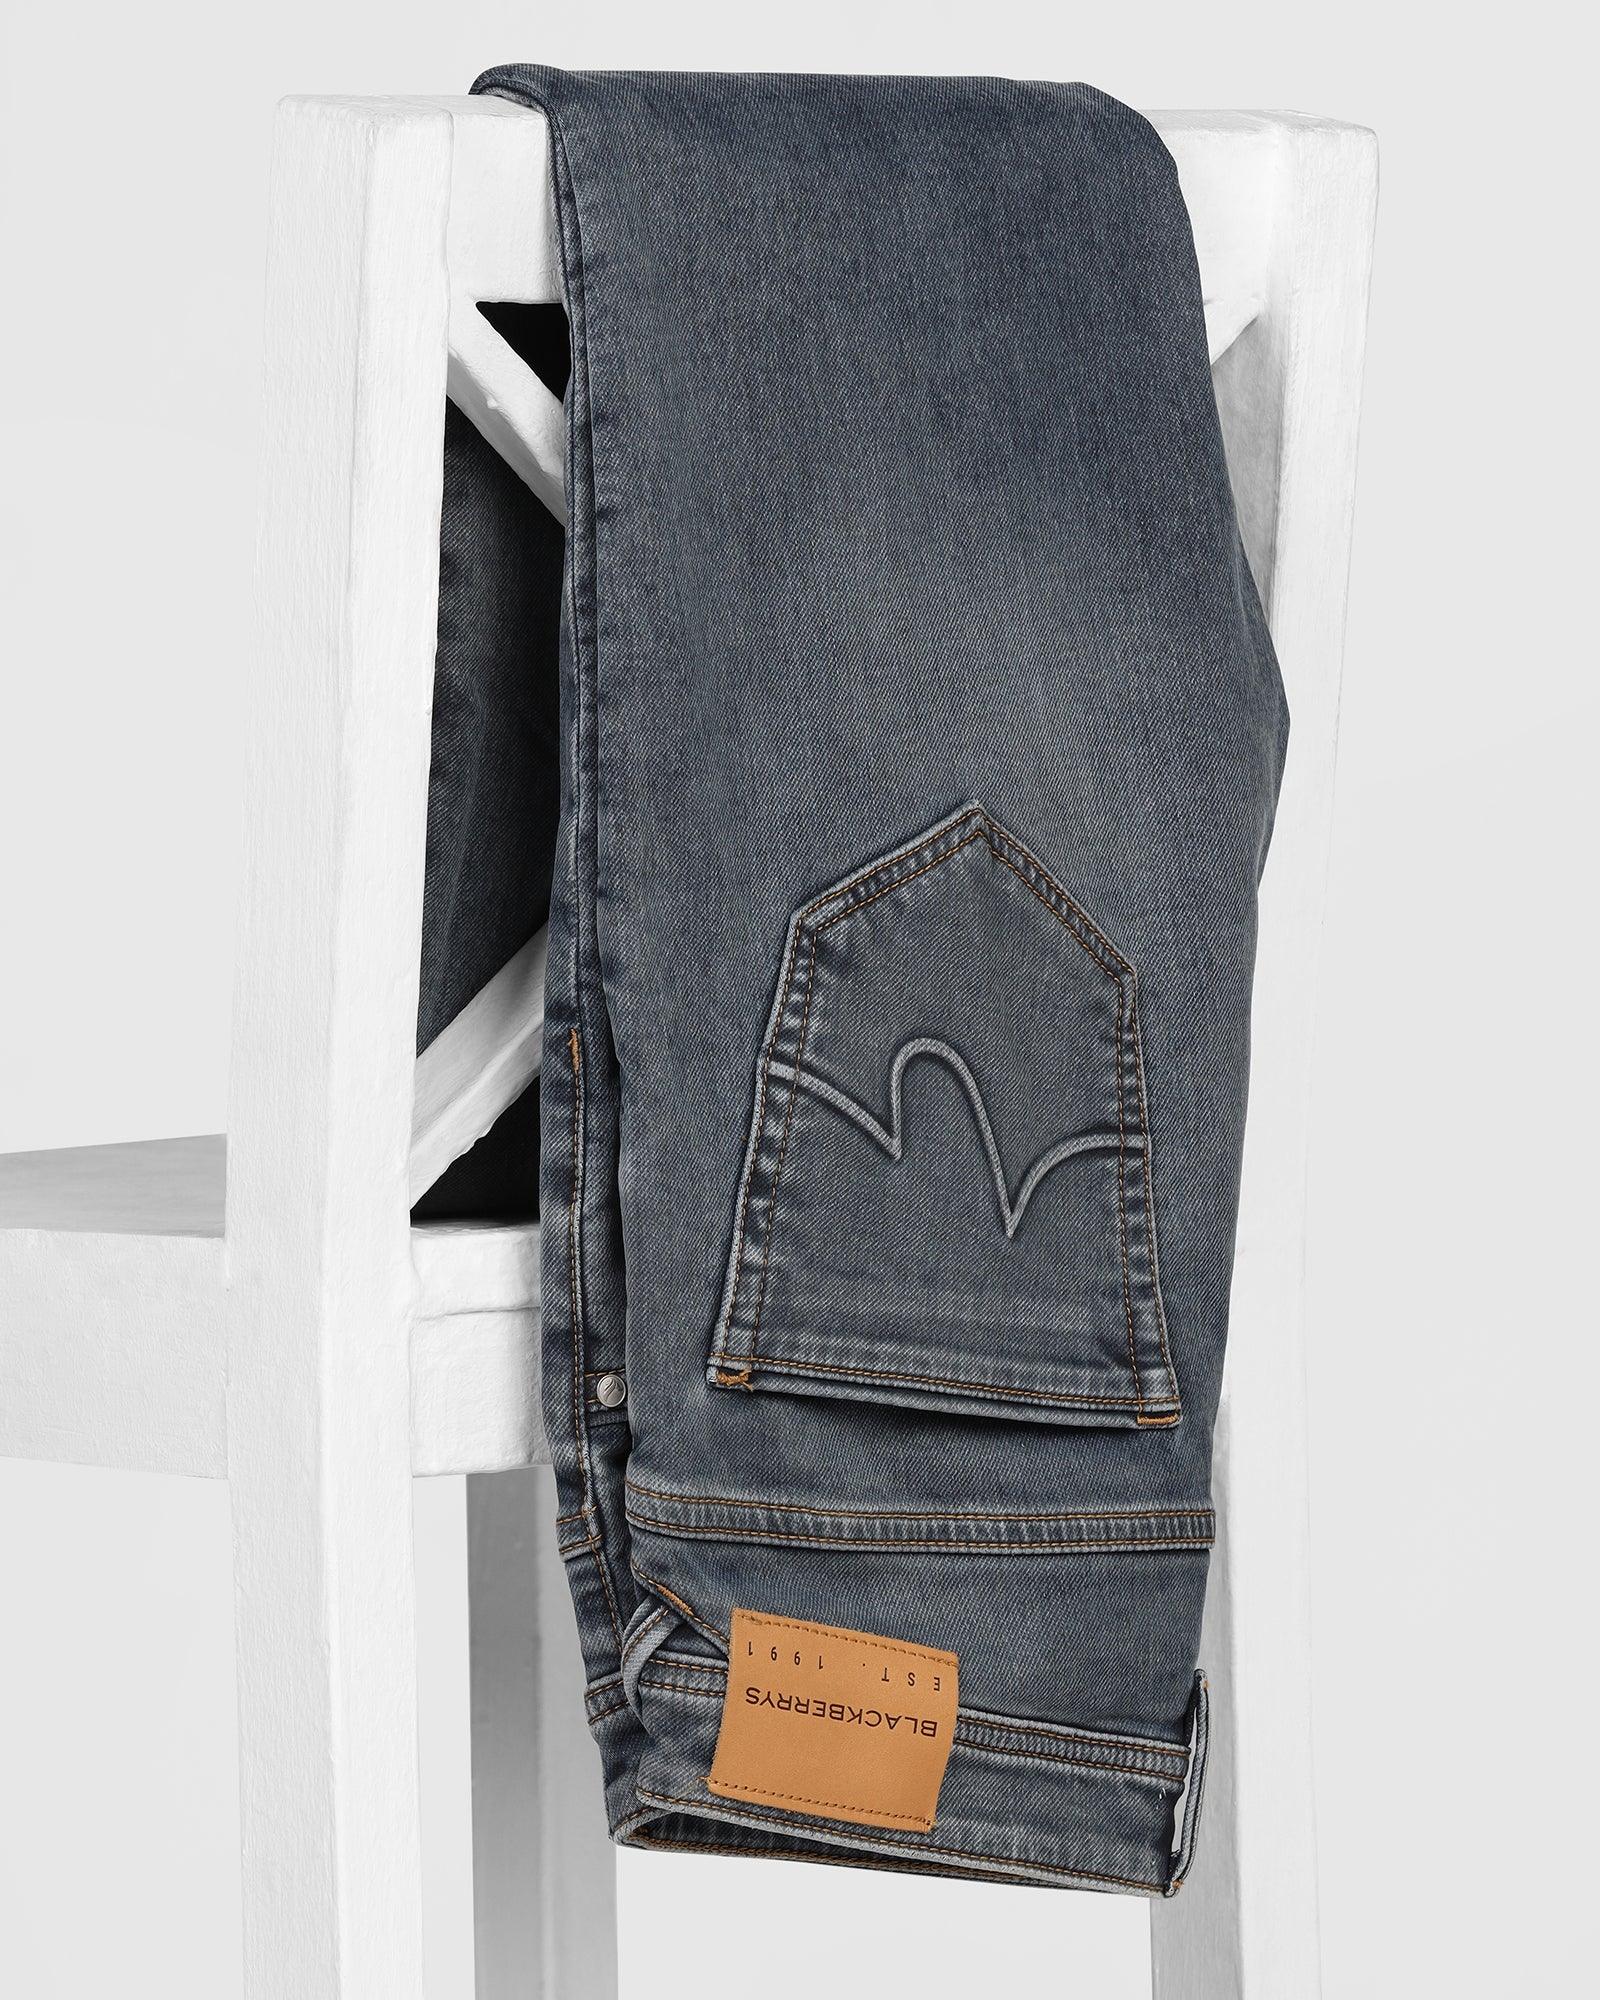 Slim Yonk Fit Indigo Textured Jeans - Lancer